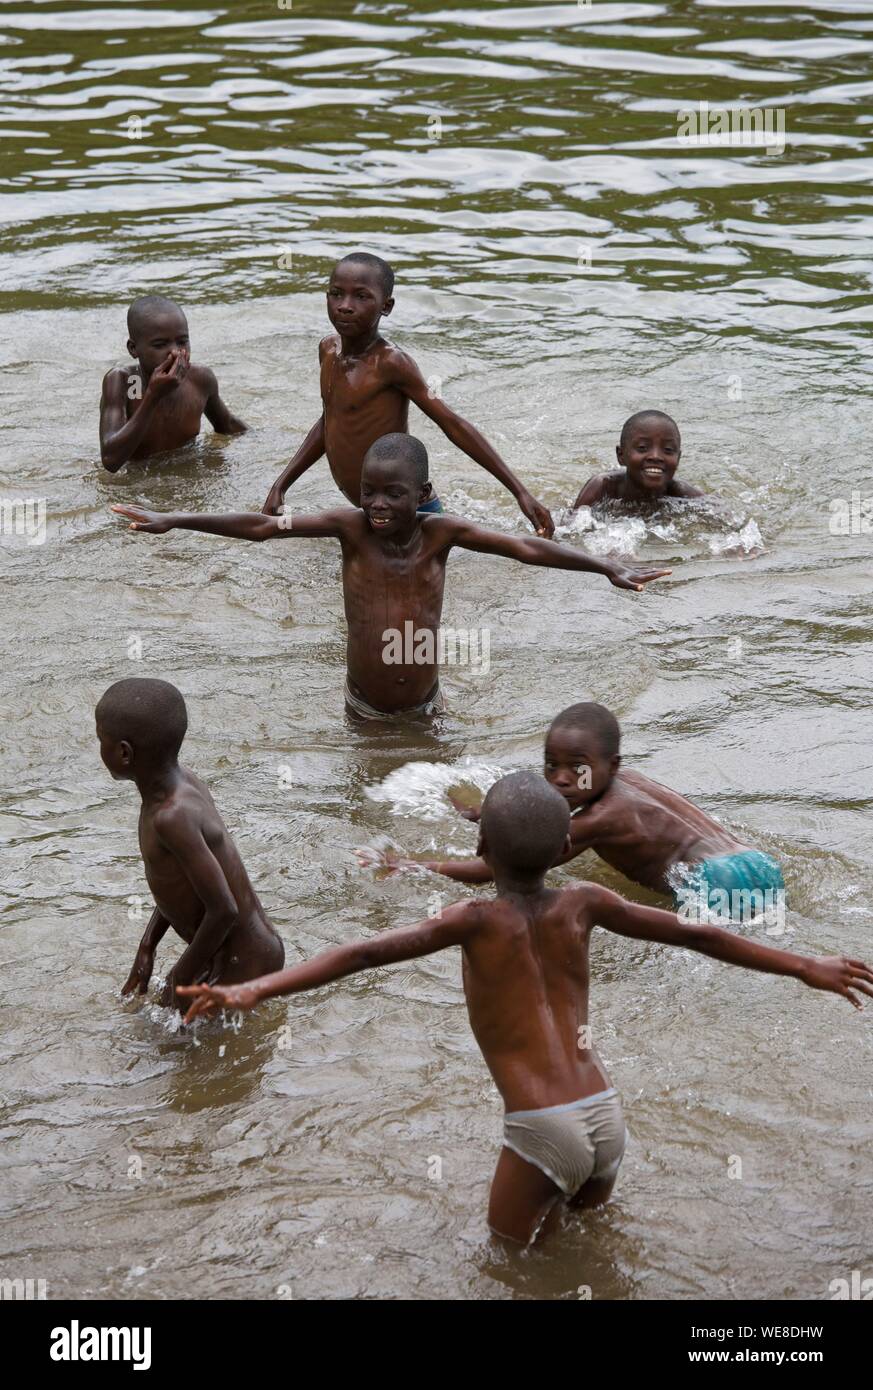 Rwanda, Lake Kivu, group of children bathing in Lake Kivu Stock Photo